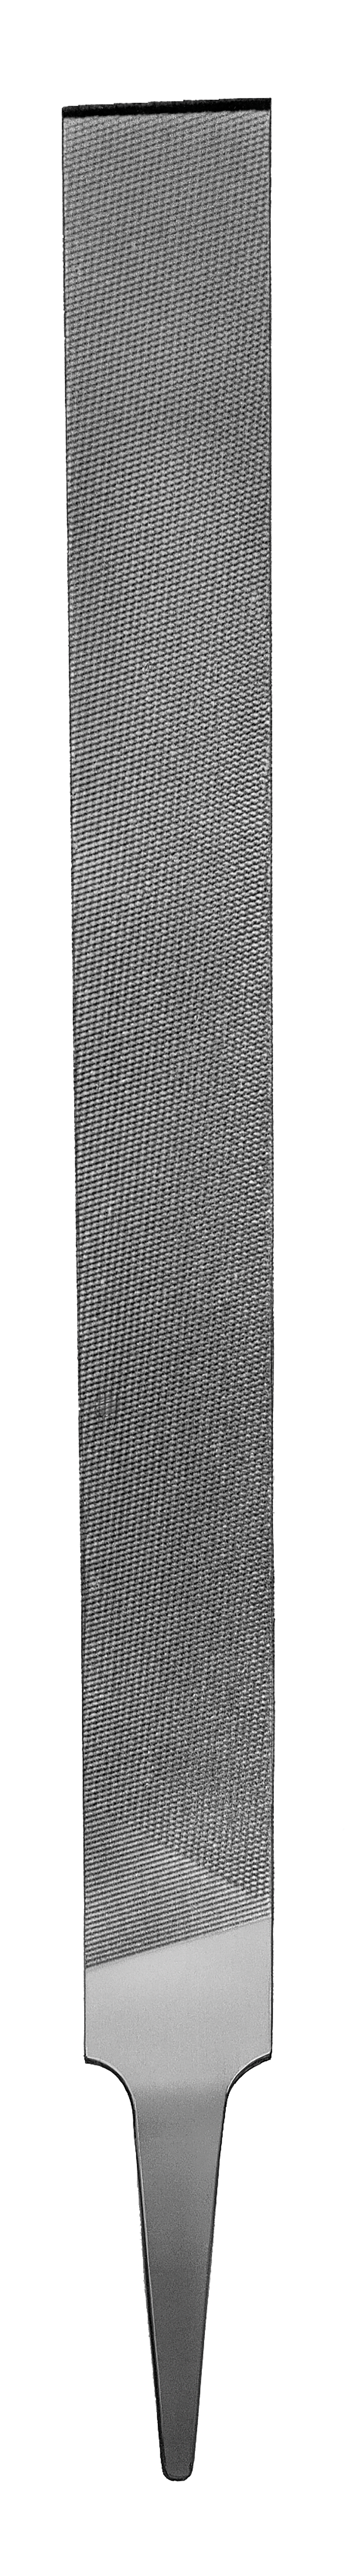 Foto of  Werkplaatsvijlen conform DIN 7261, vorm F, keep 2, 250 mm 